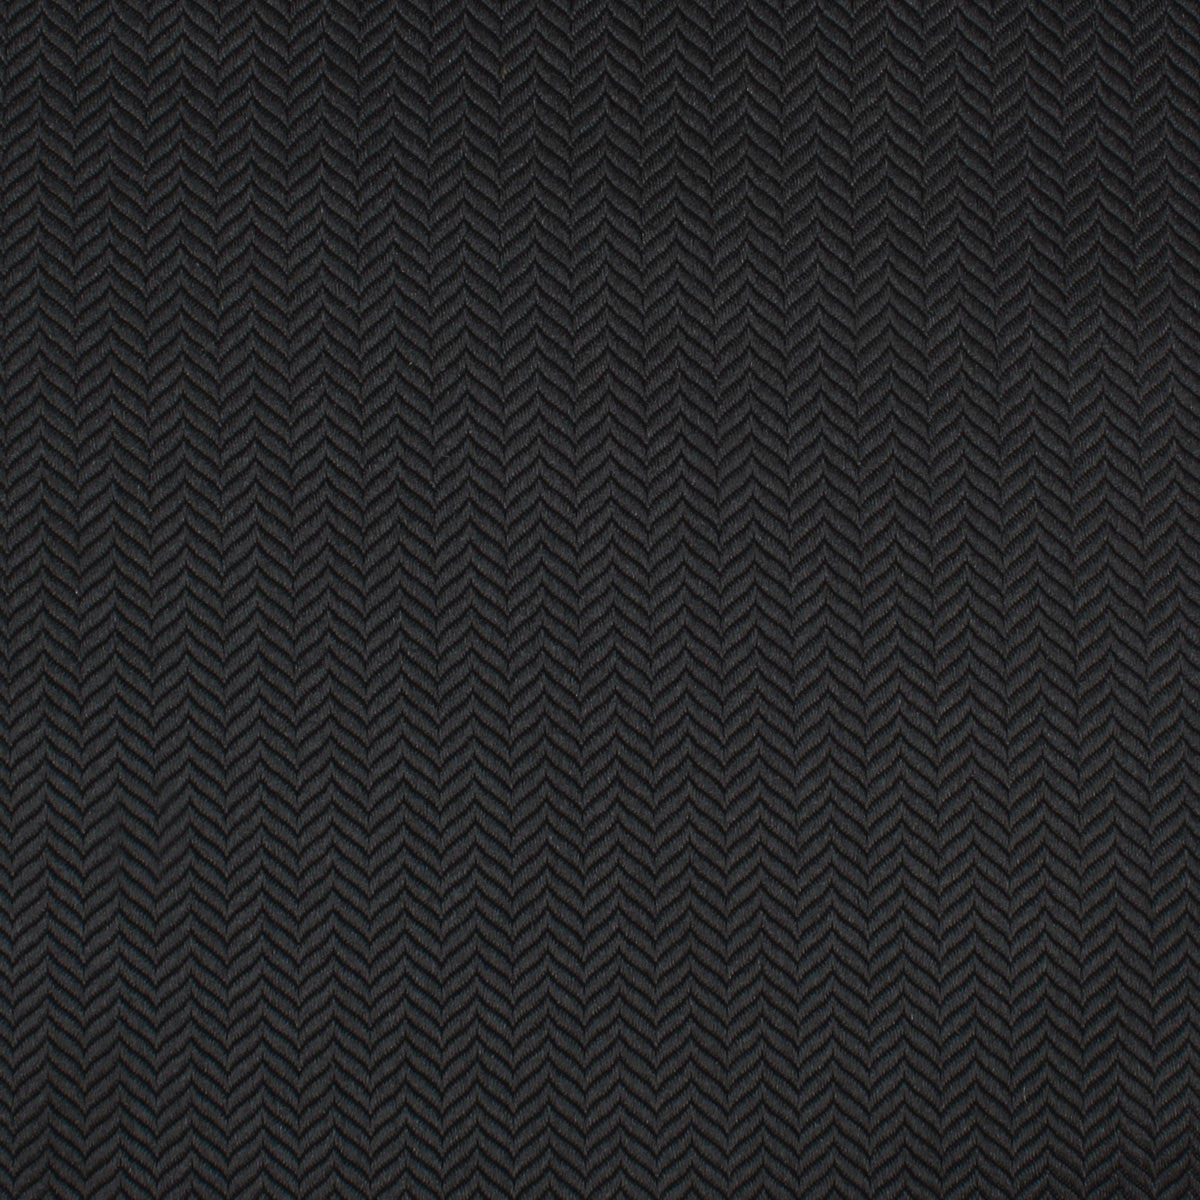 Onyx Black Herringbone Pocket Square Fabric